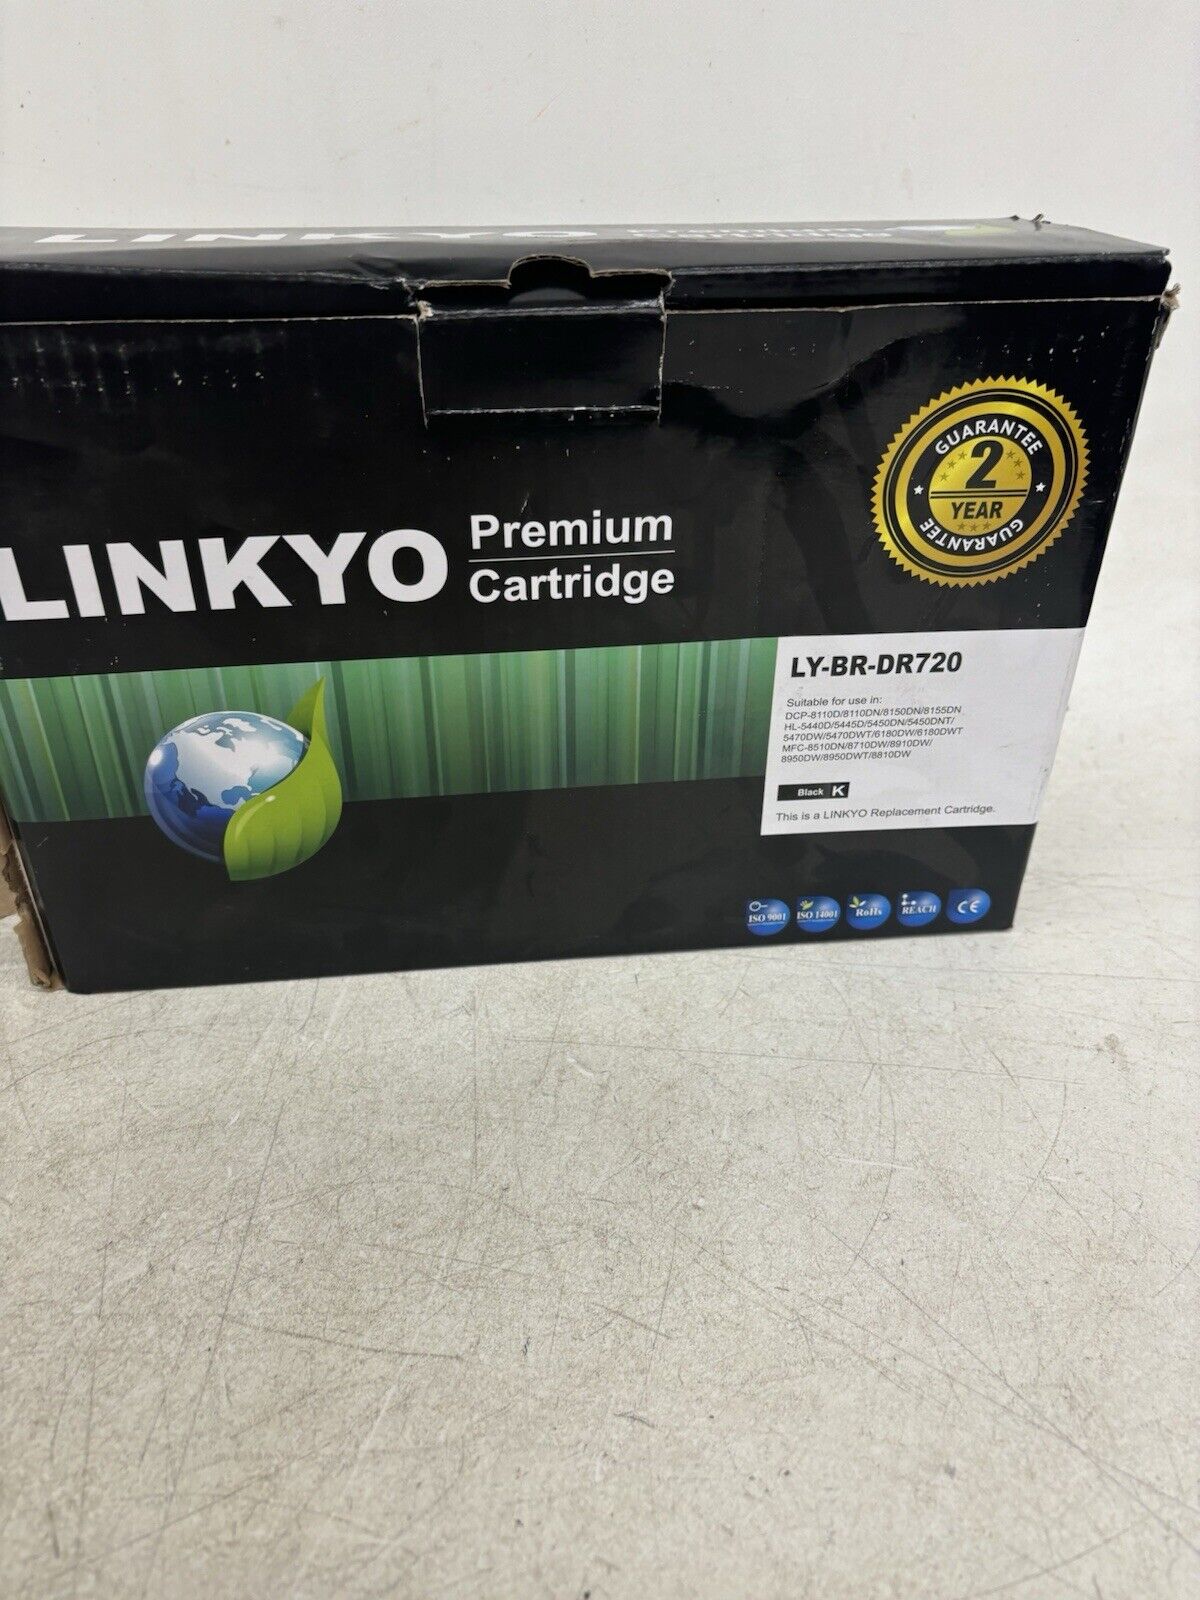 Linkyo Premium Cartridge-black-Lu-br-dr720